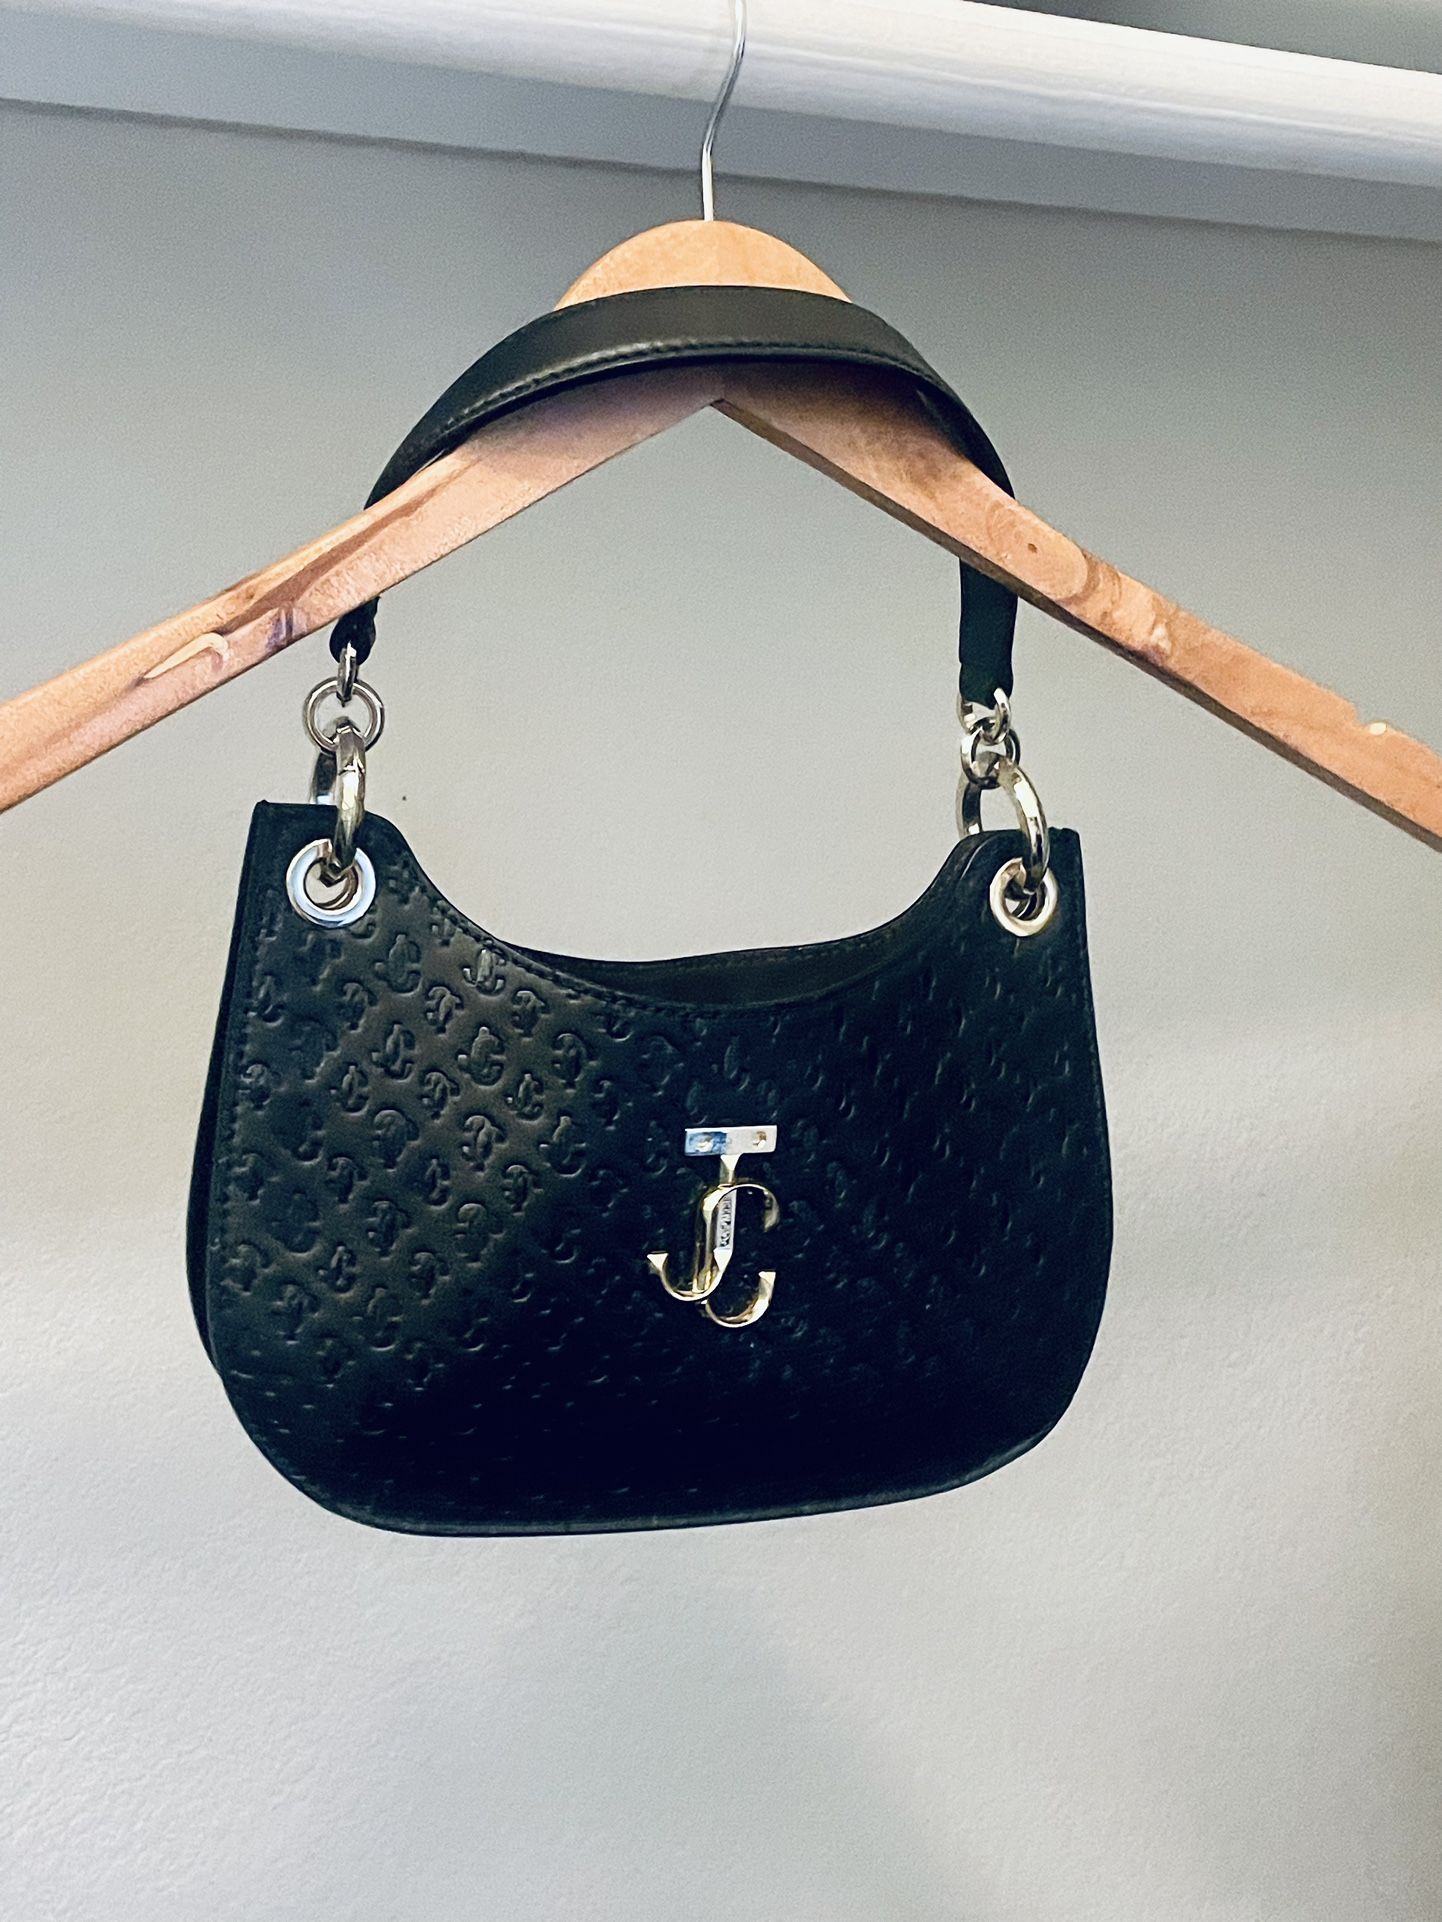 Jimmy Choo Logo/Pattern Black Leather Handbag Purse